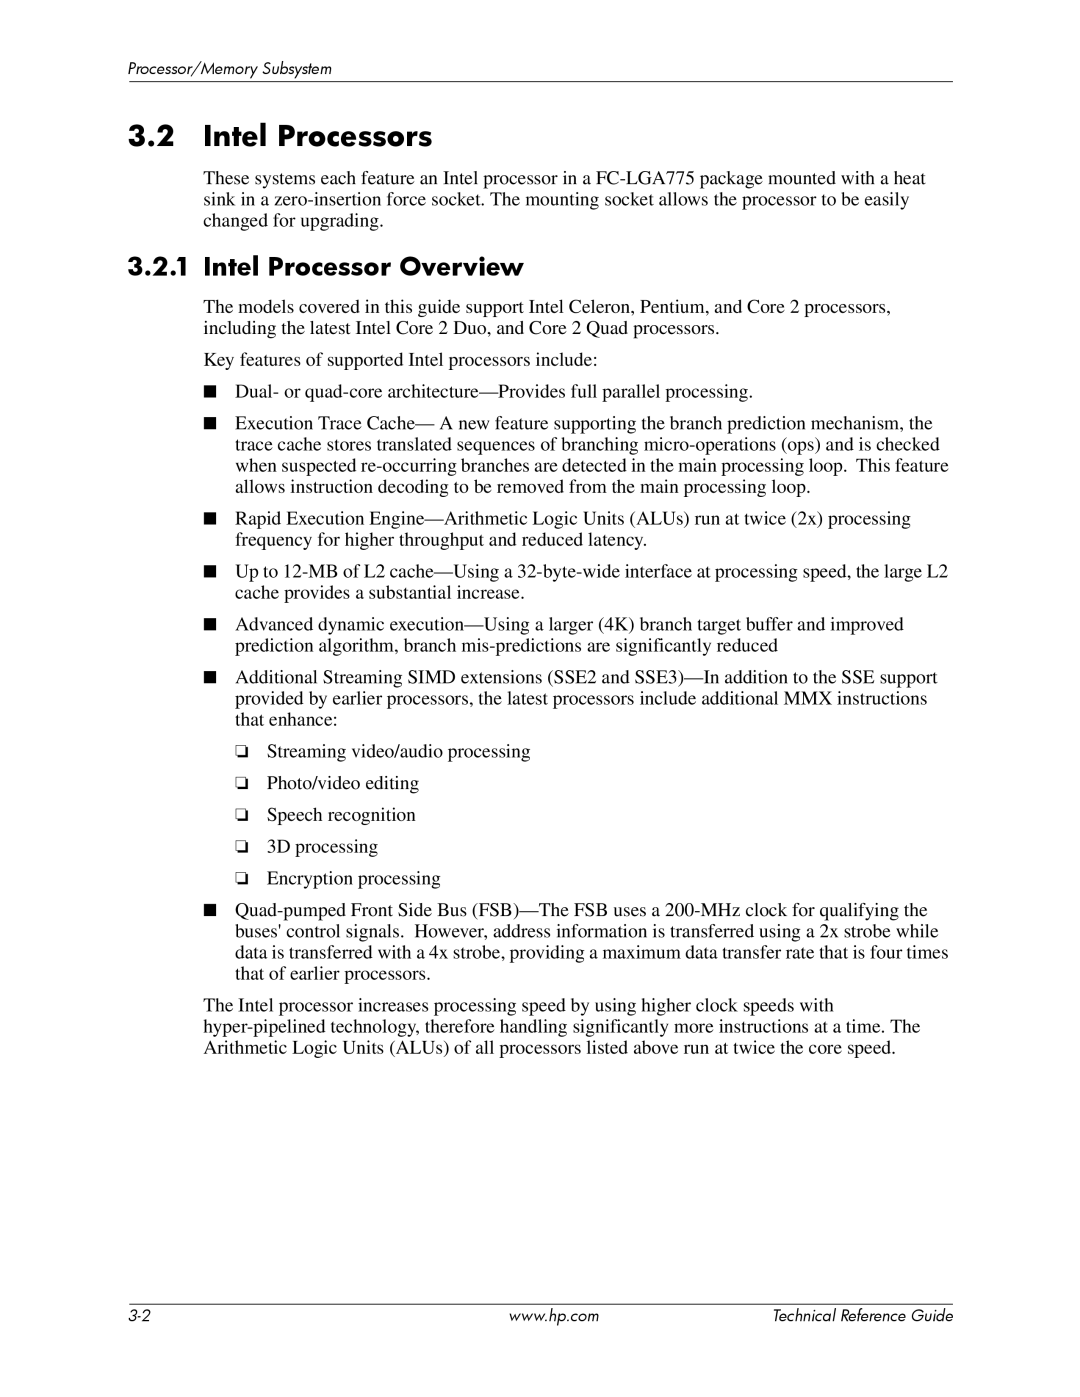 HP dc7800 tower manual Intel Processors, Intel Processor Overview 